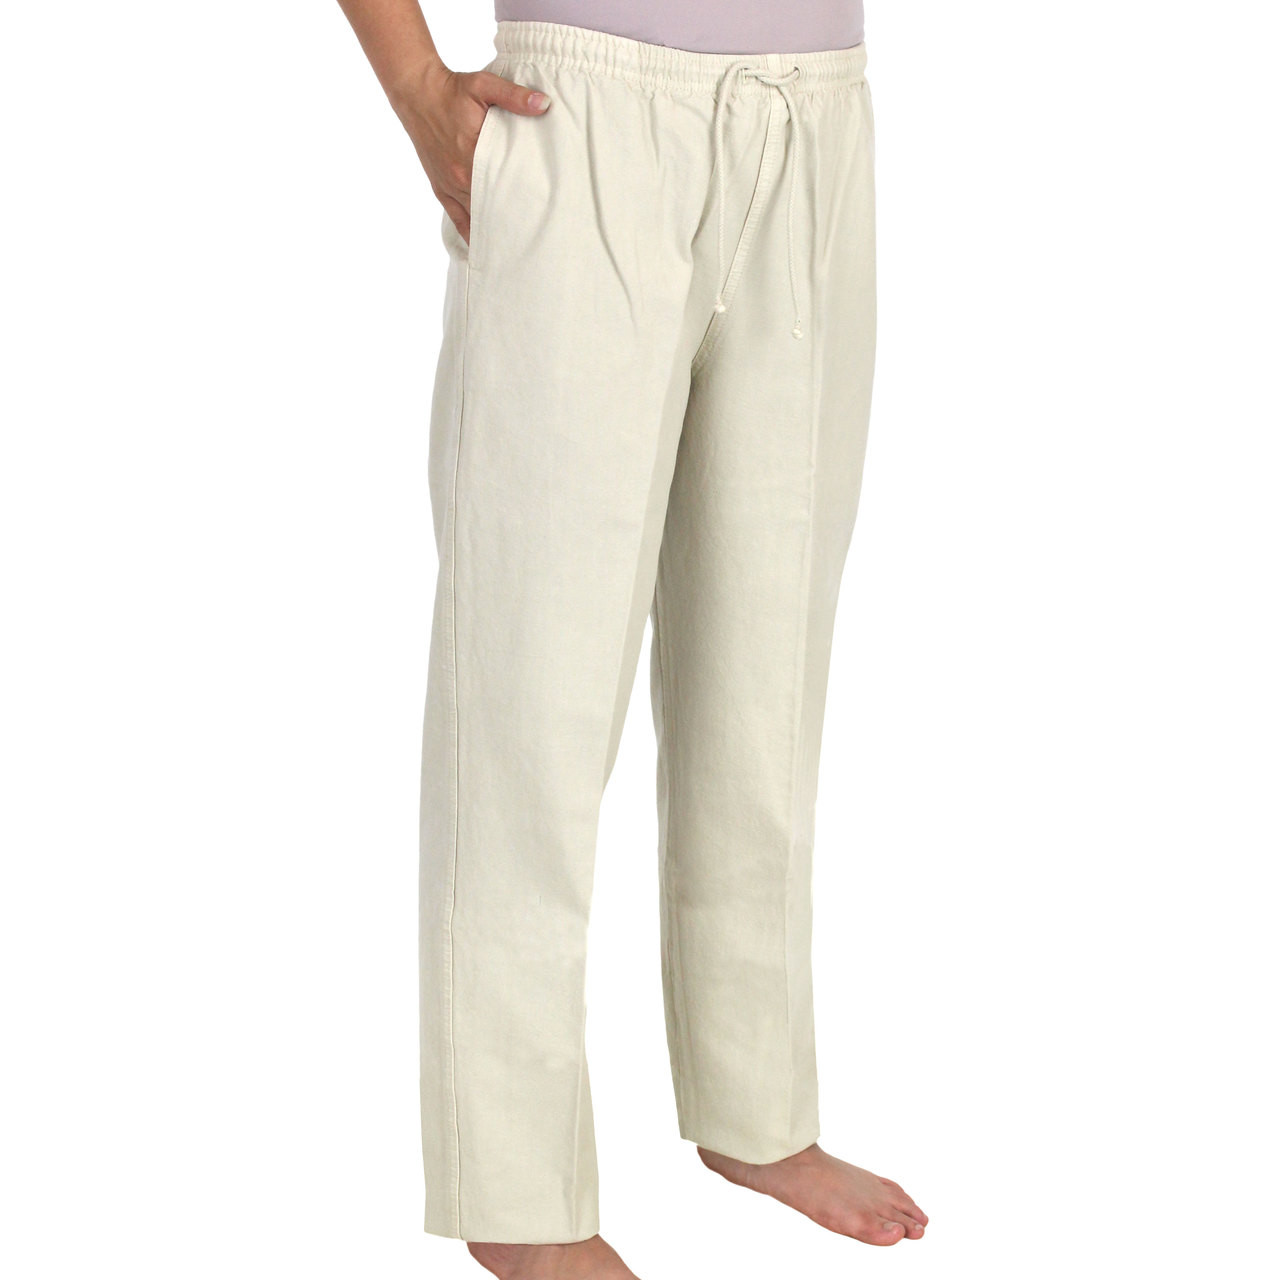 Red Cotton Slub Pants – The Pajama Factory